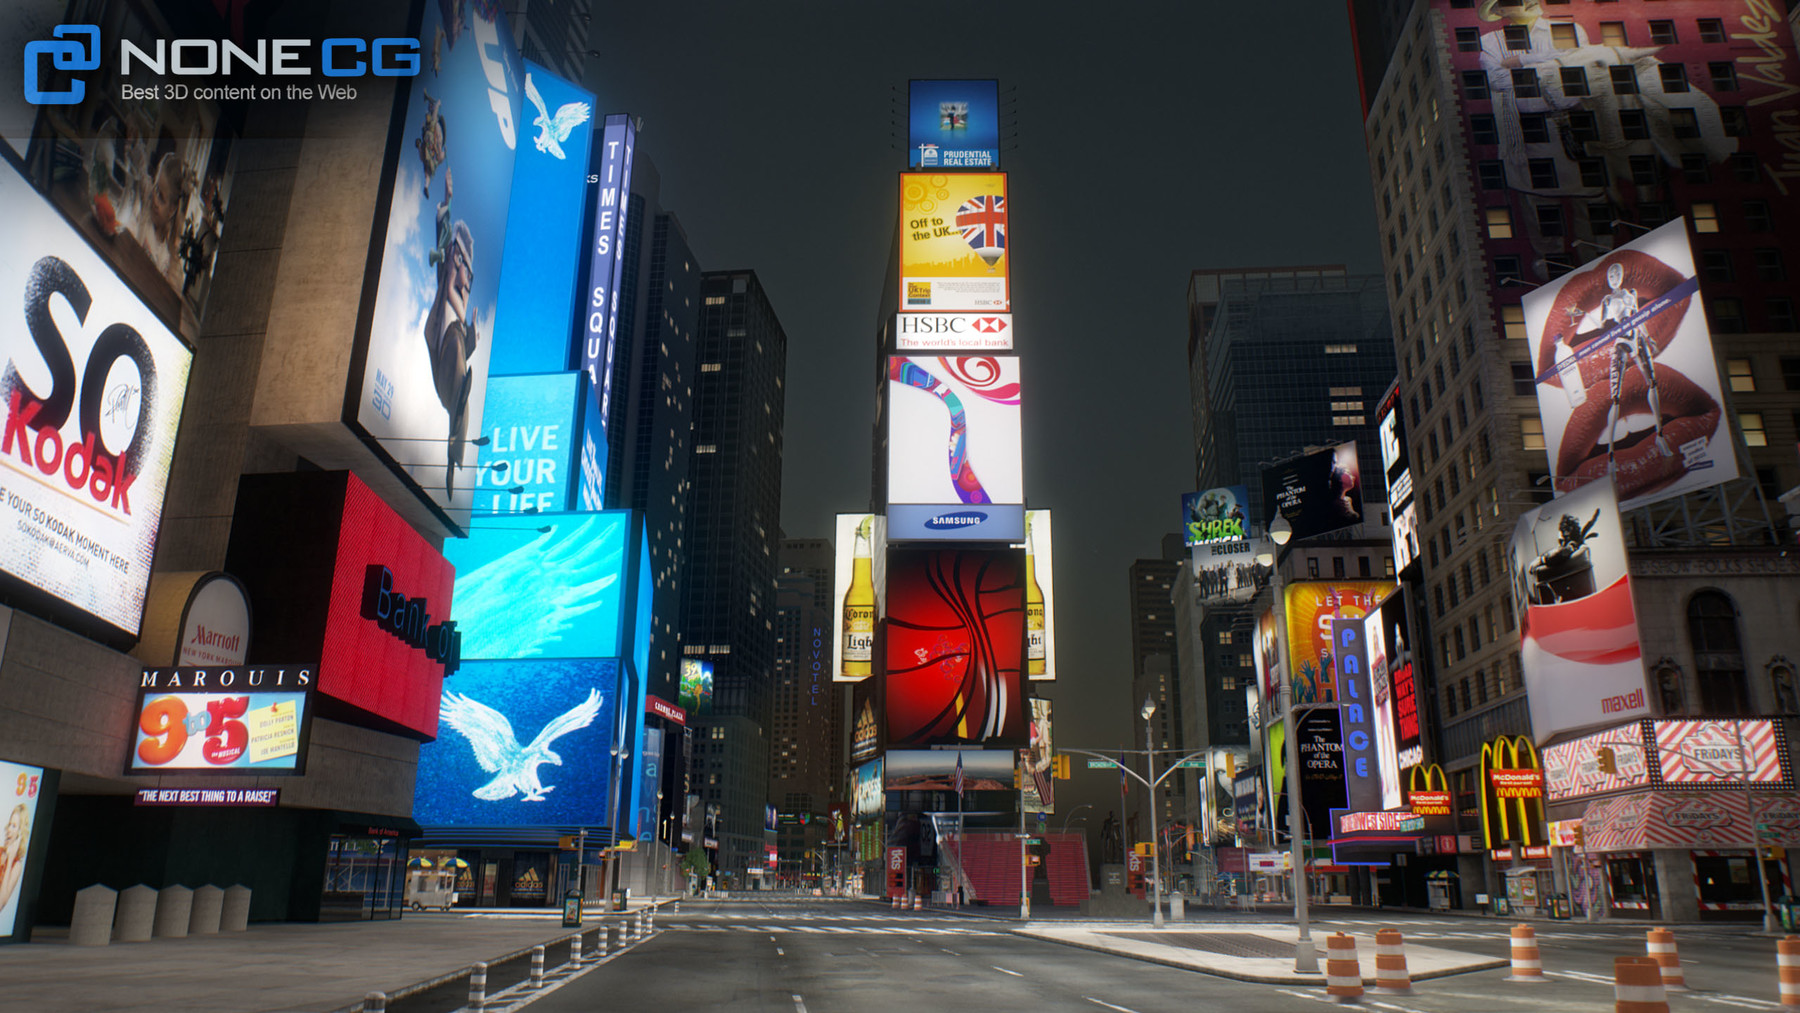 Nappes Papier Peint-MANHATTAN New York City Taxi Times Square Broadway mur 08 V